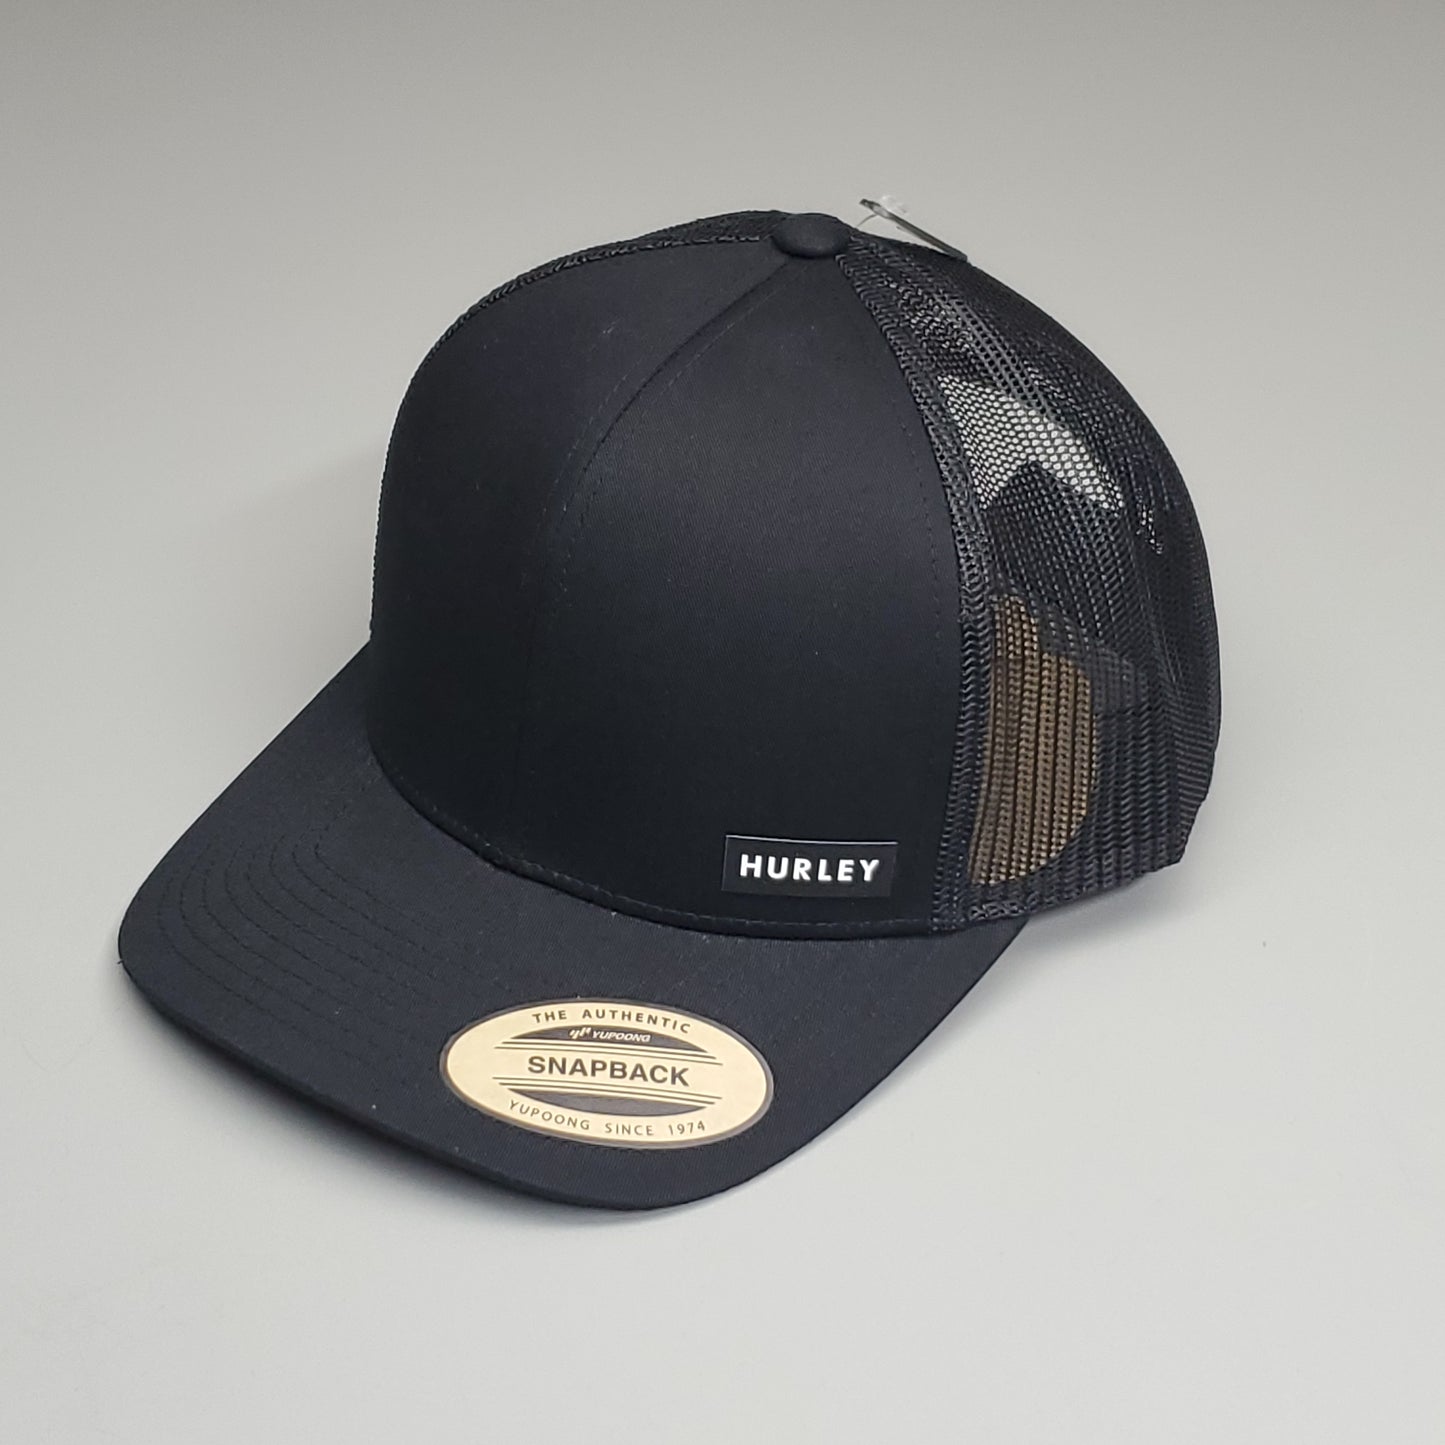 HURLEY Major Trucker Baseball Cap Mesh Snapback Hat One Size Black (New)